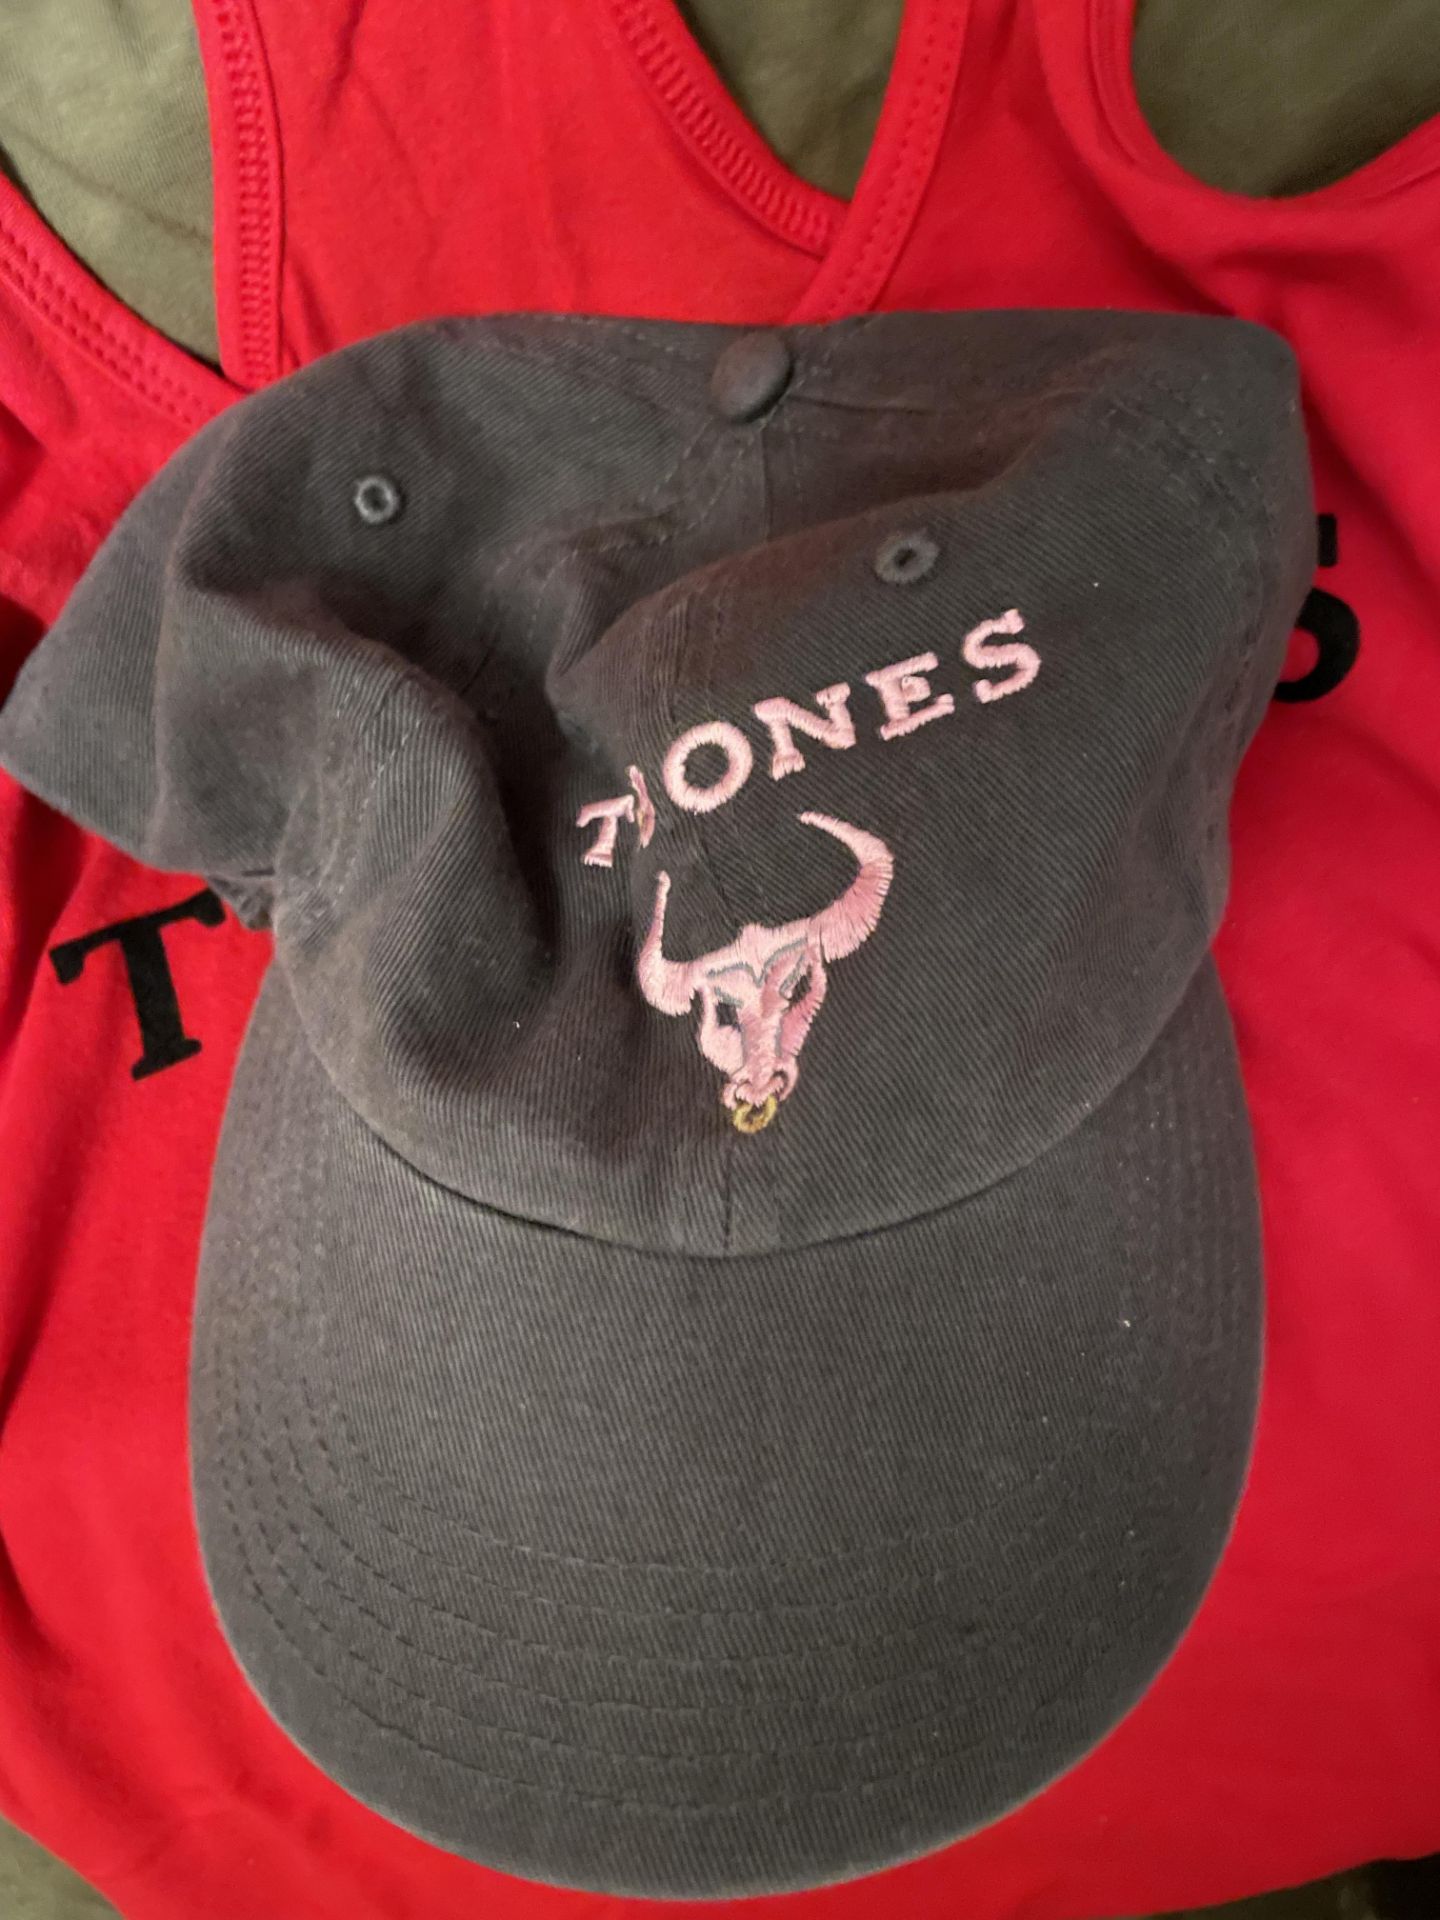 (Lot) T-Bone Logo Apparel C/O: Hats, T-Shirts, Sweatshirts, Jackets, Etc. - Image 6 of 6